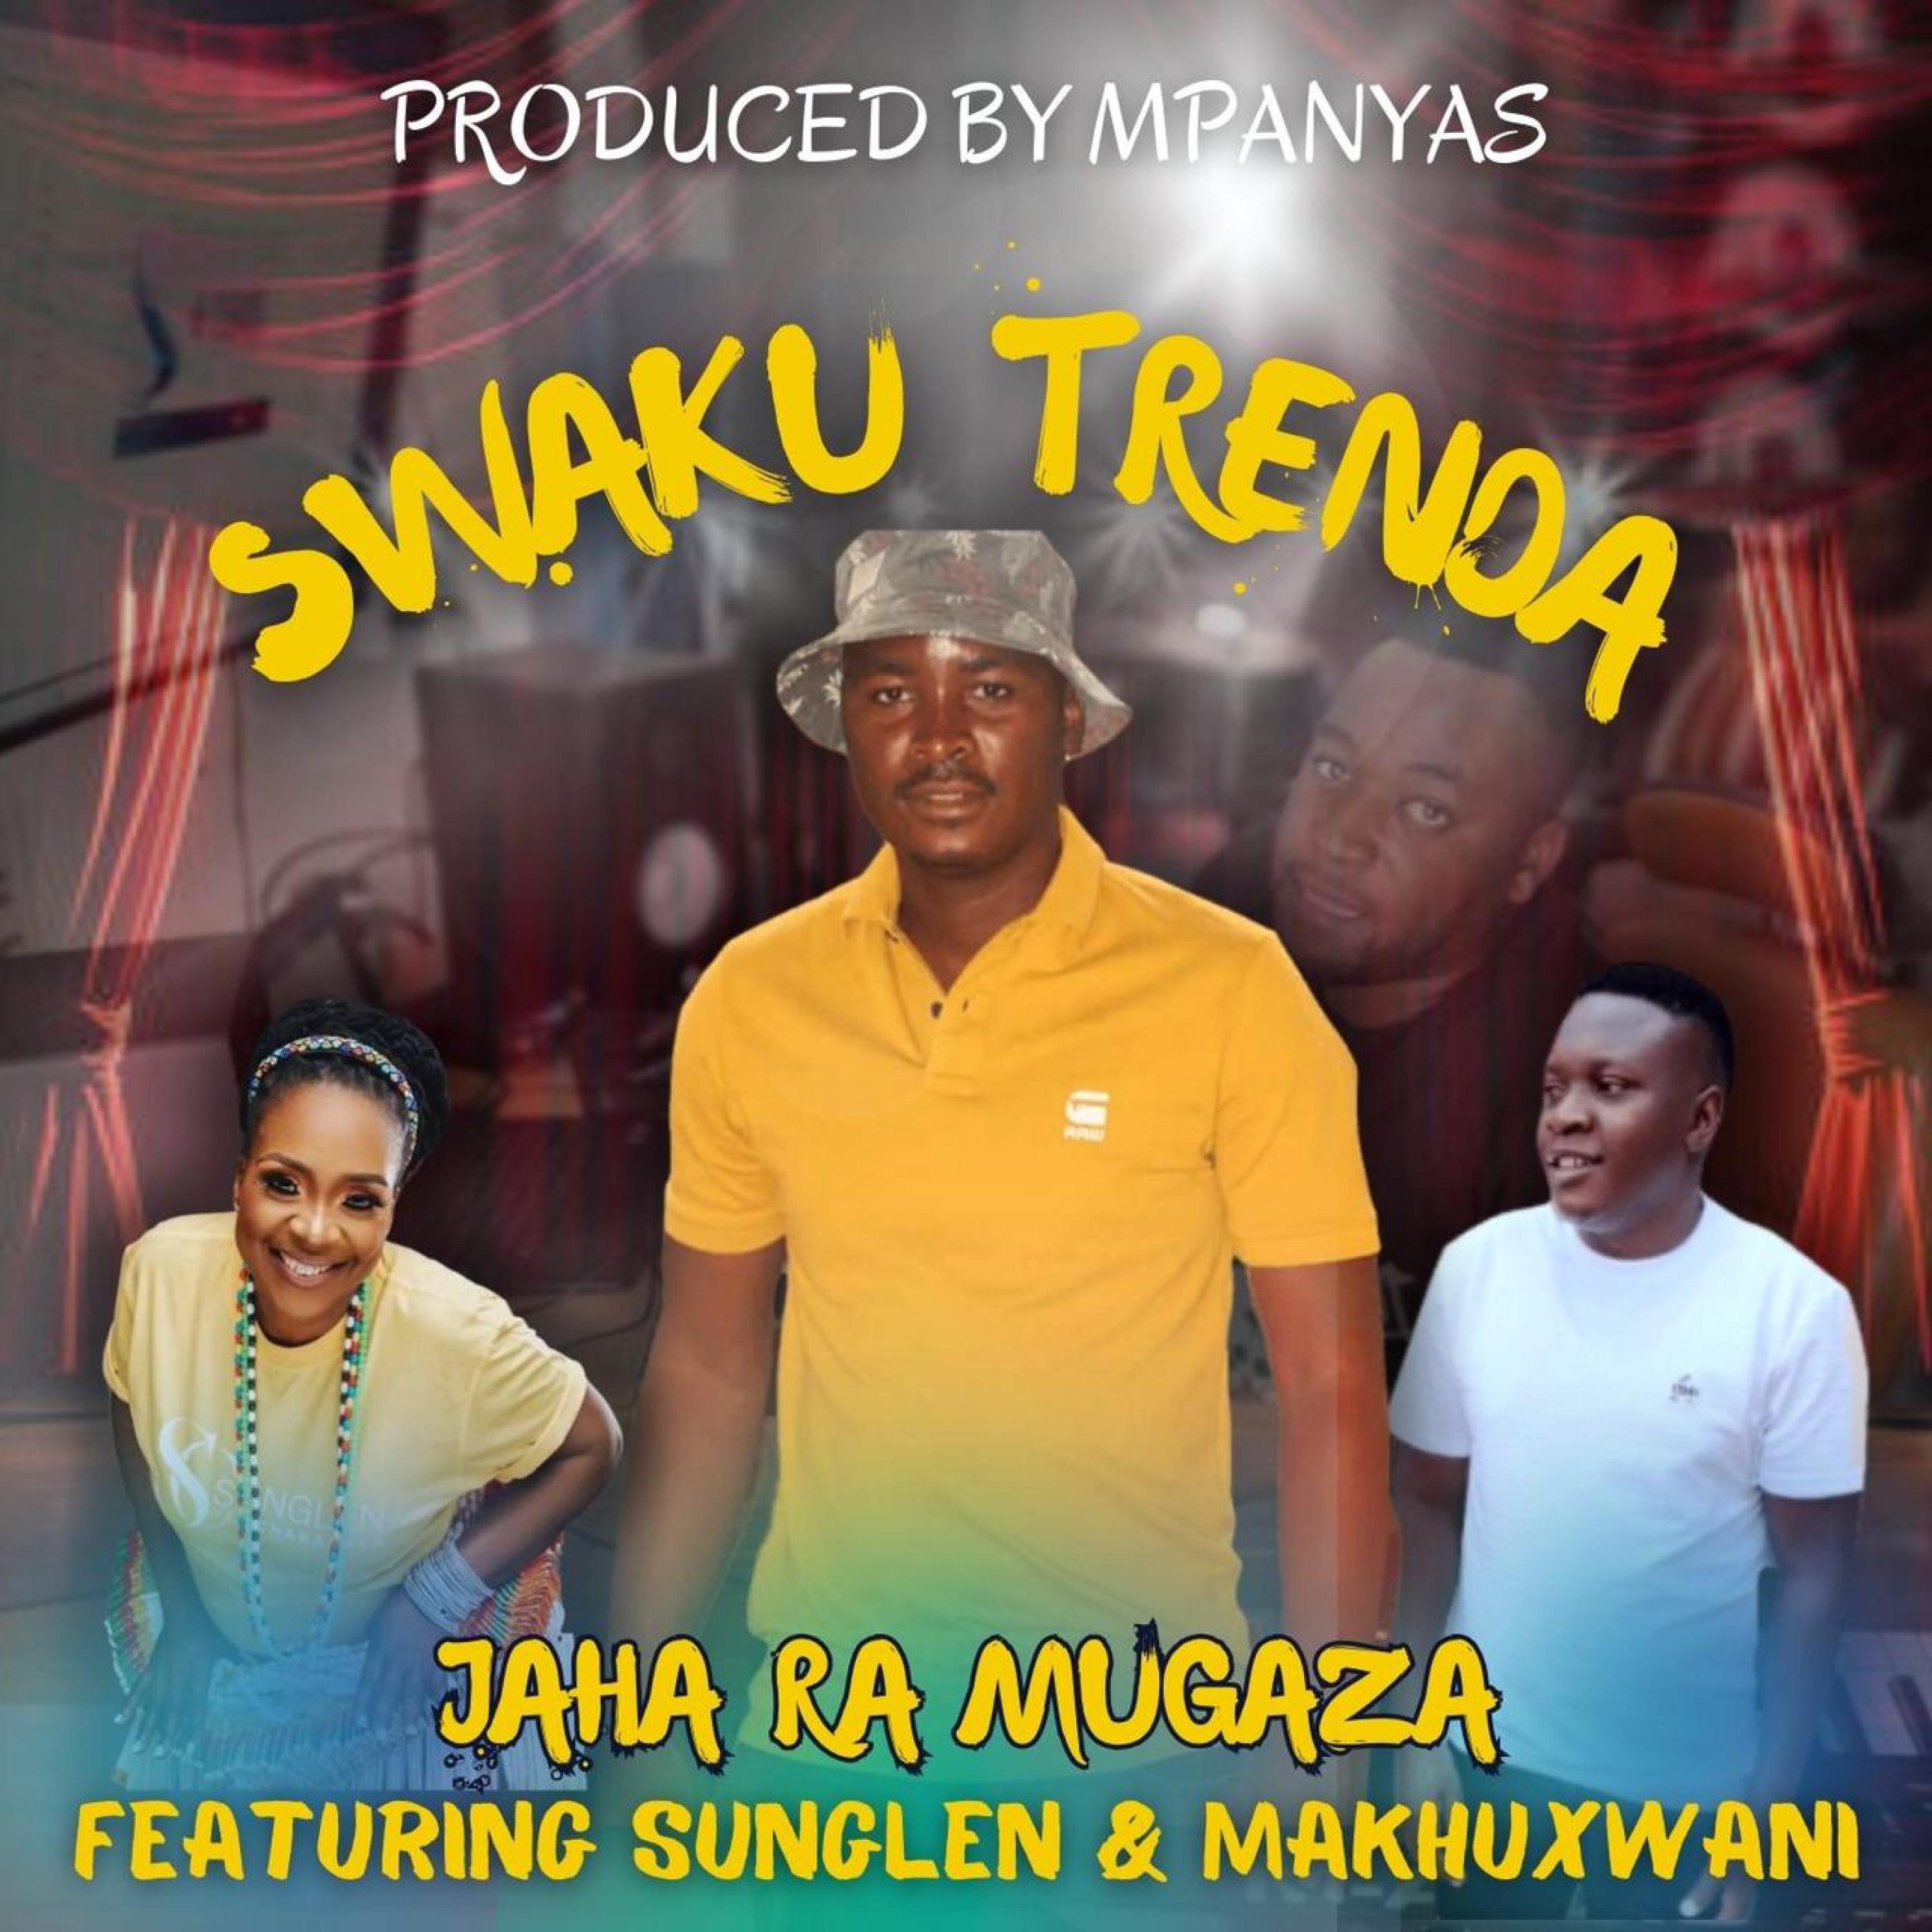 Mpanyas The Producer - Swaku Trenda (feat. Jaha Ra mugaza & Sunglen chabalala)